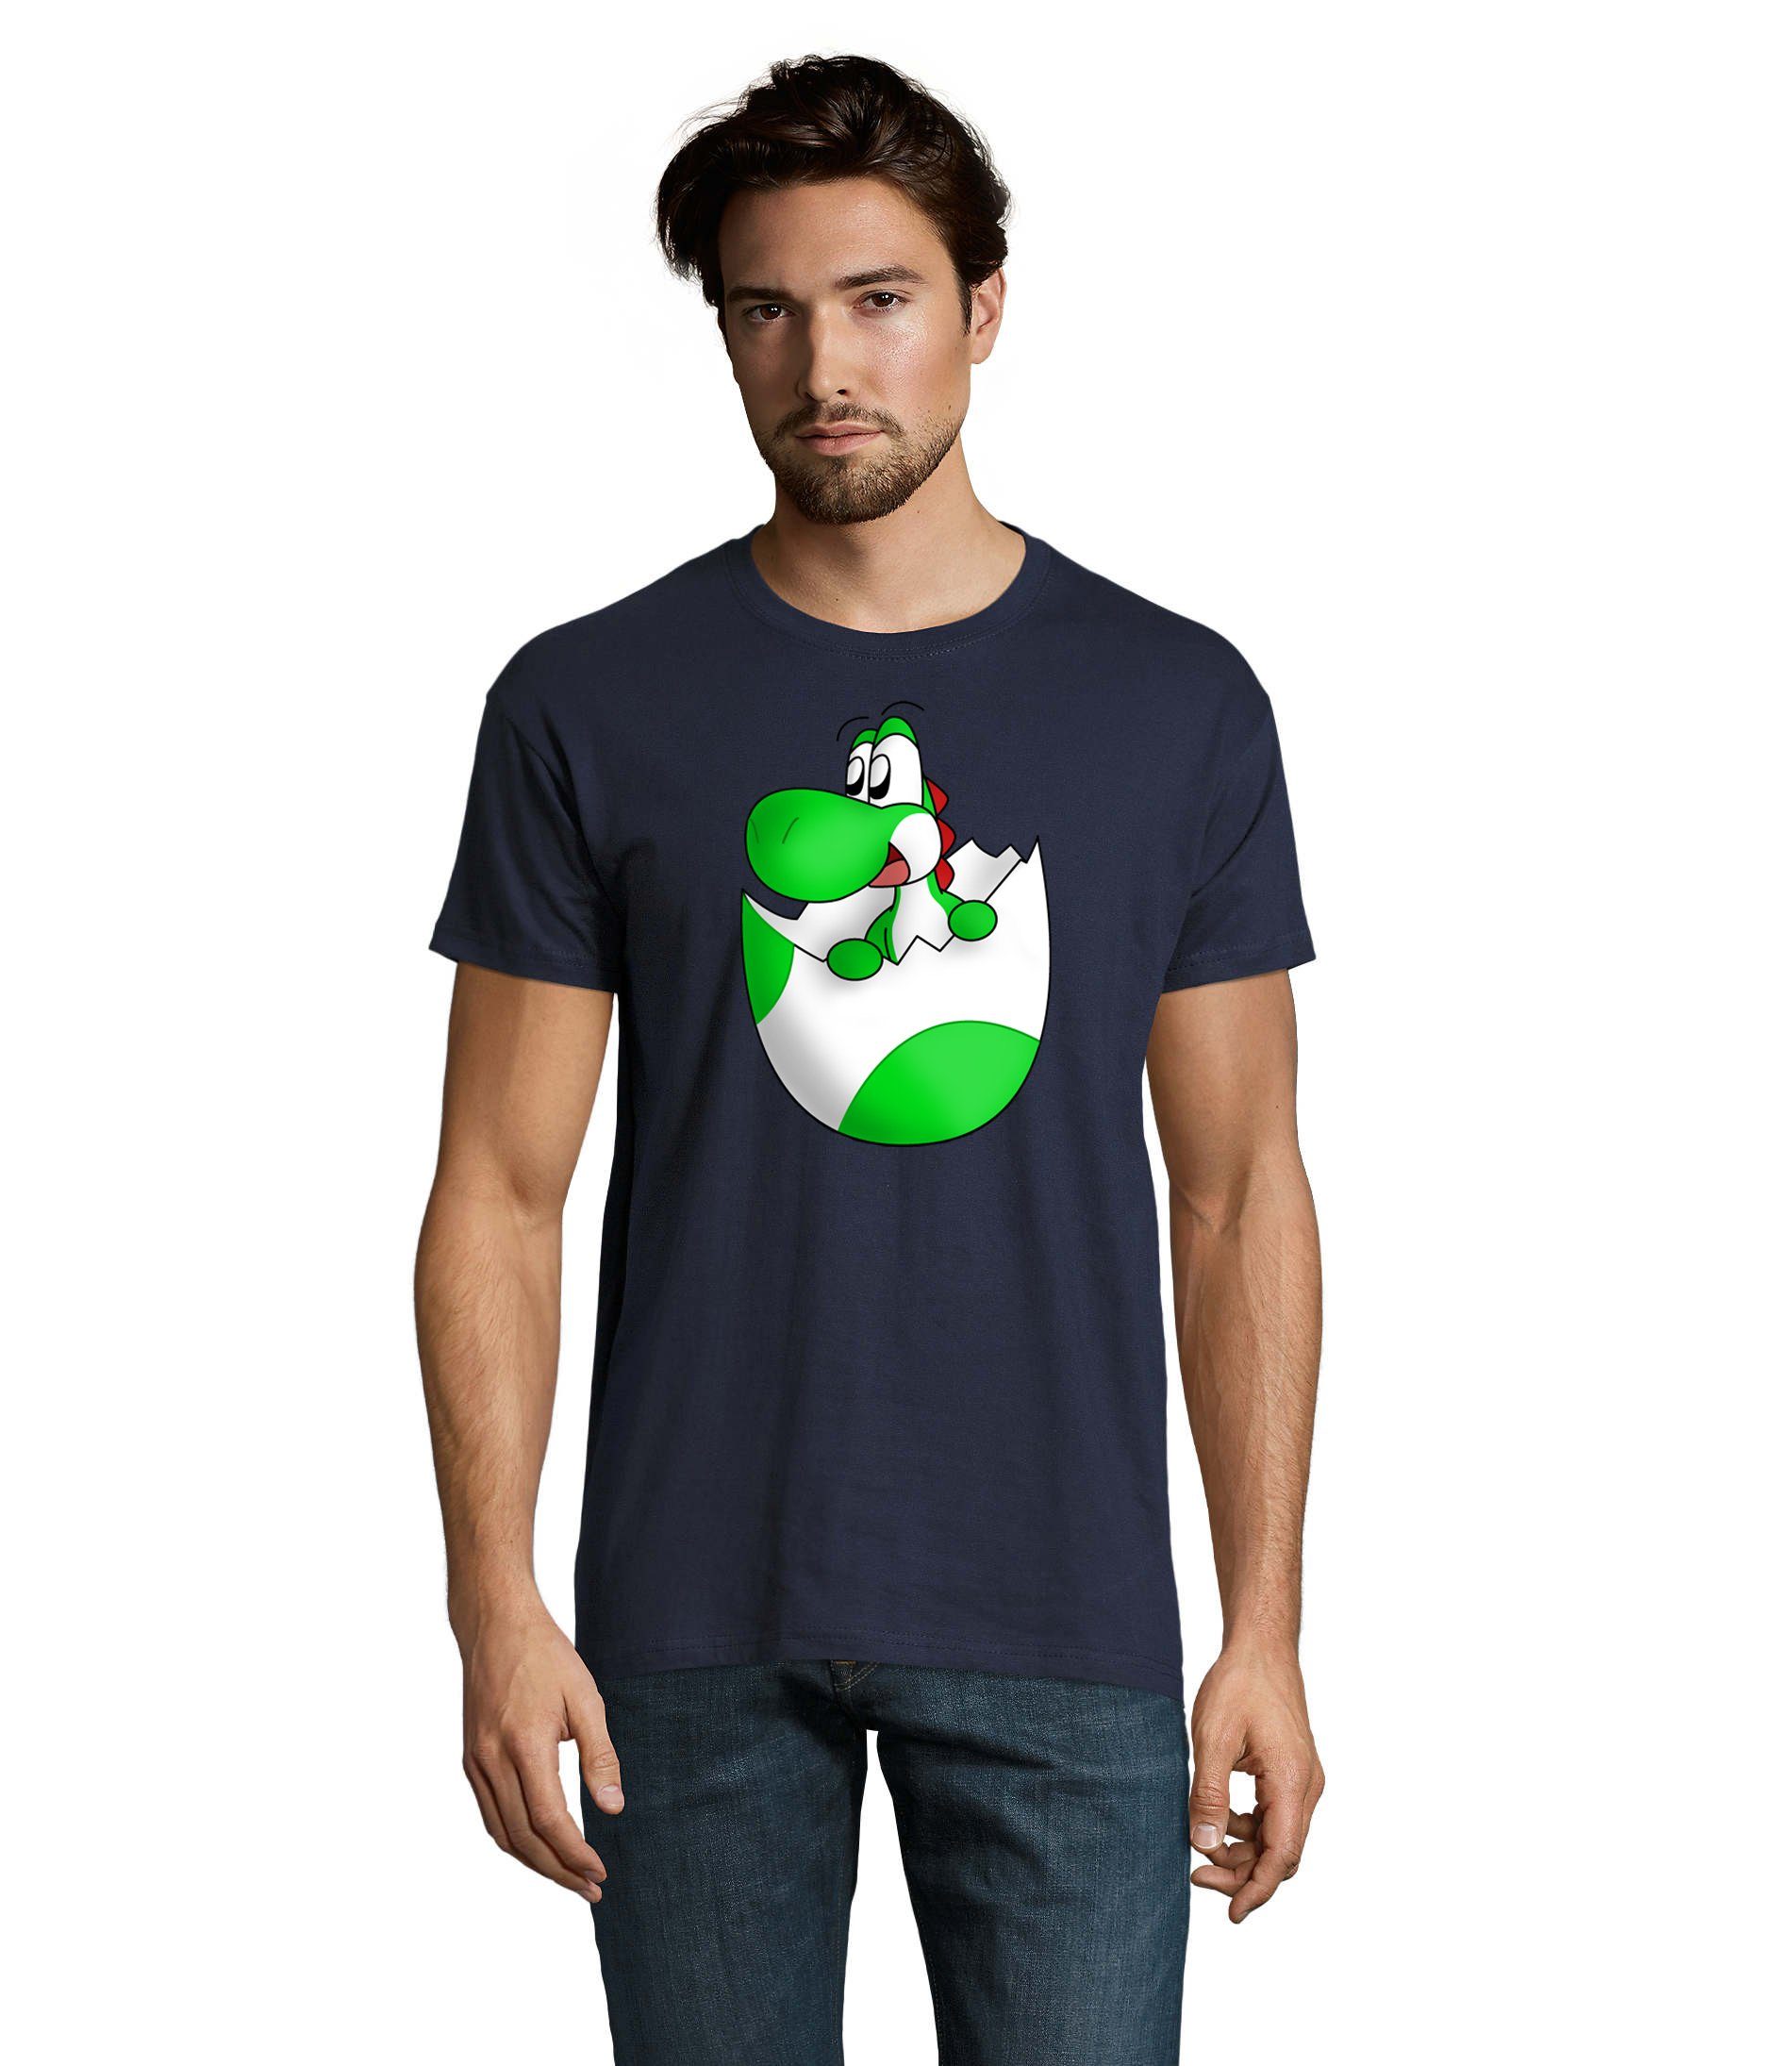 Yoshi & Gaming T-Shirt Baby Herren Ei Blondie Brownie Spiel Konsole Mario Nintendo Navyblau